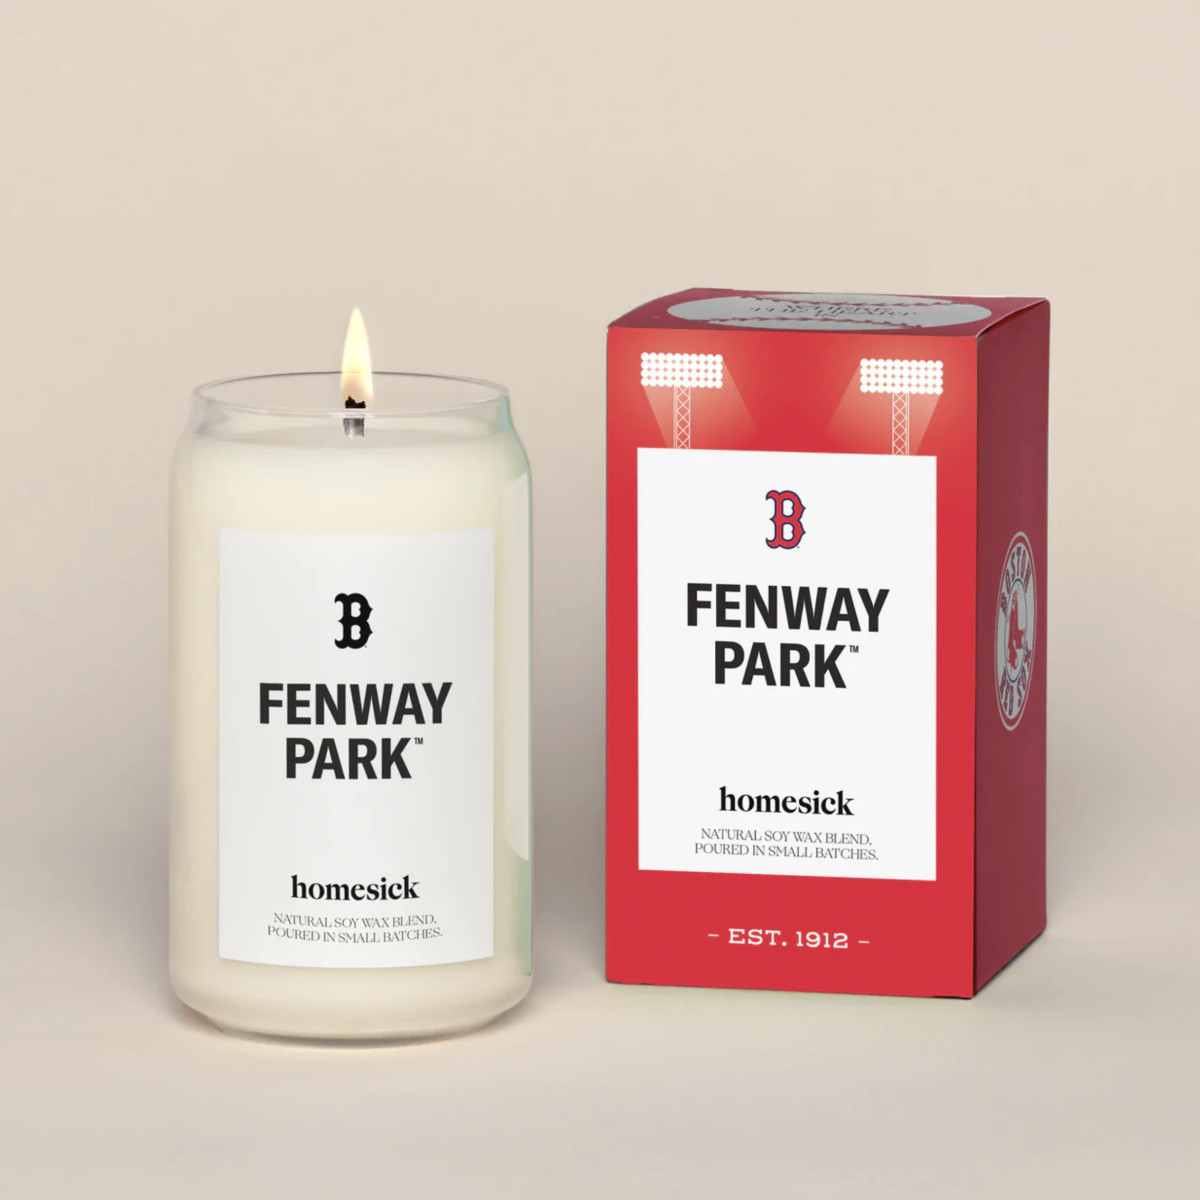 homesick fenway park candle